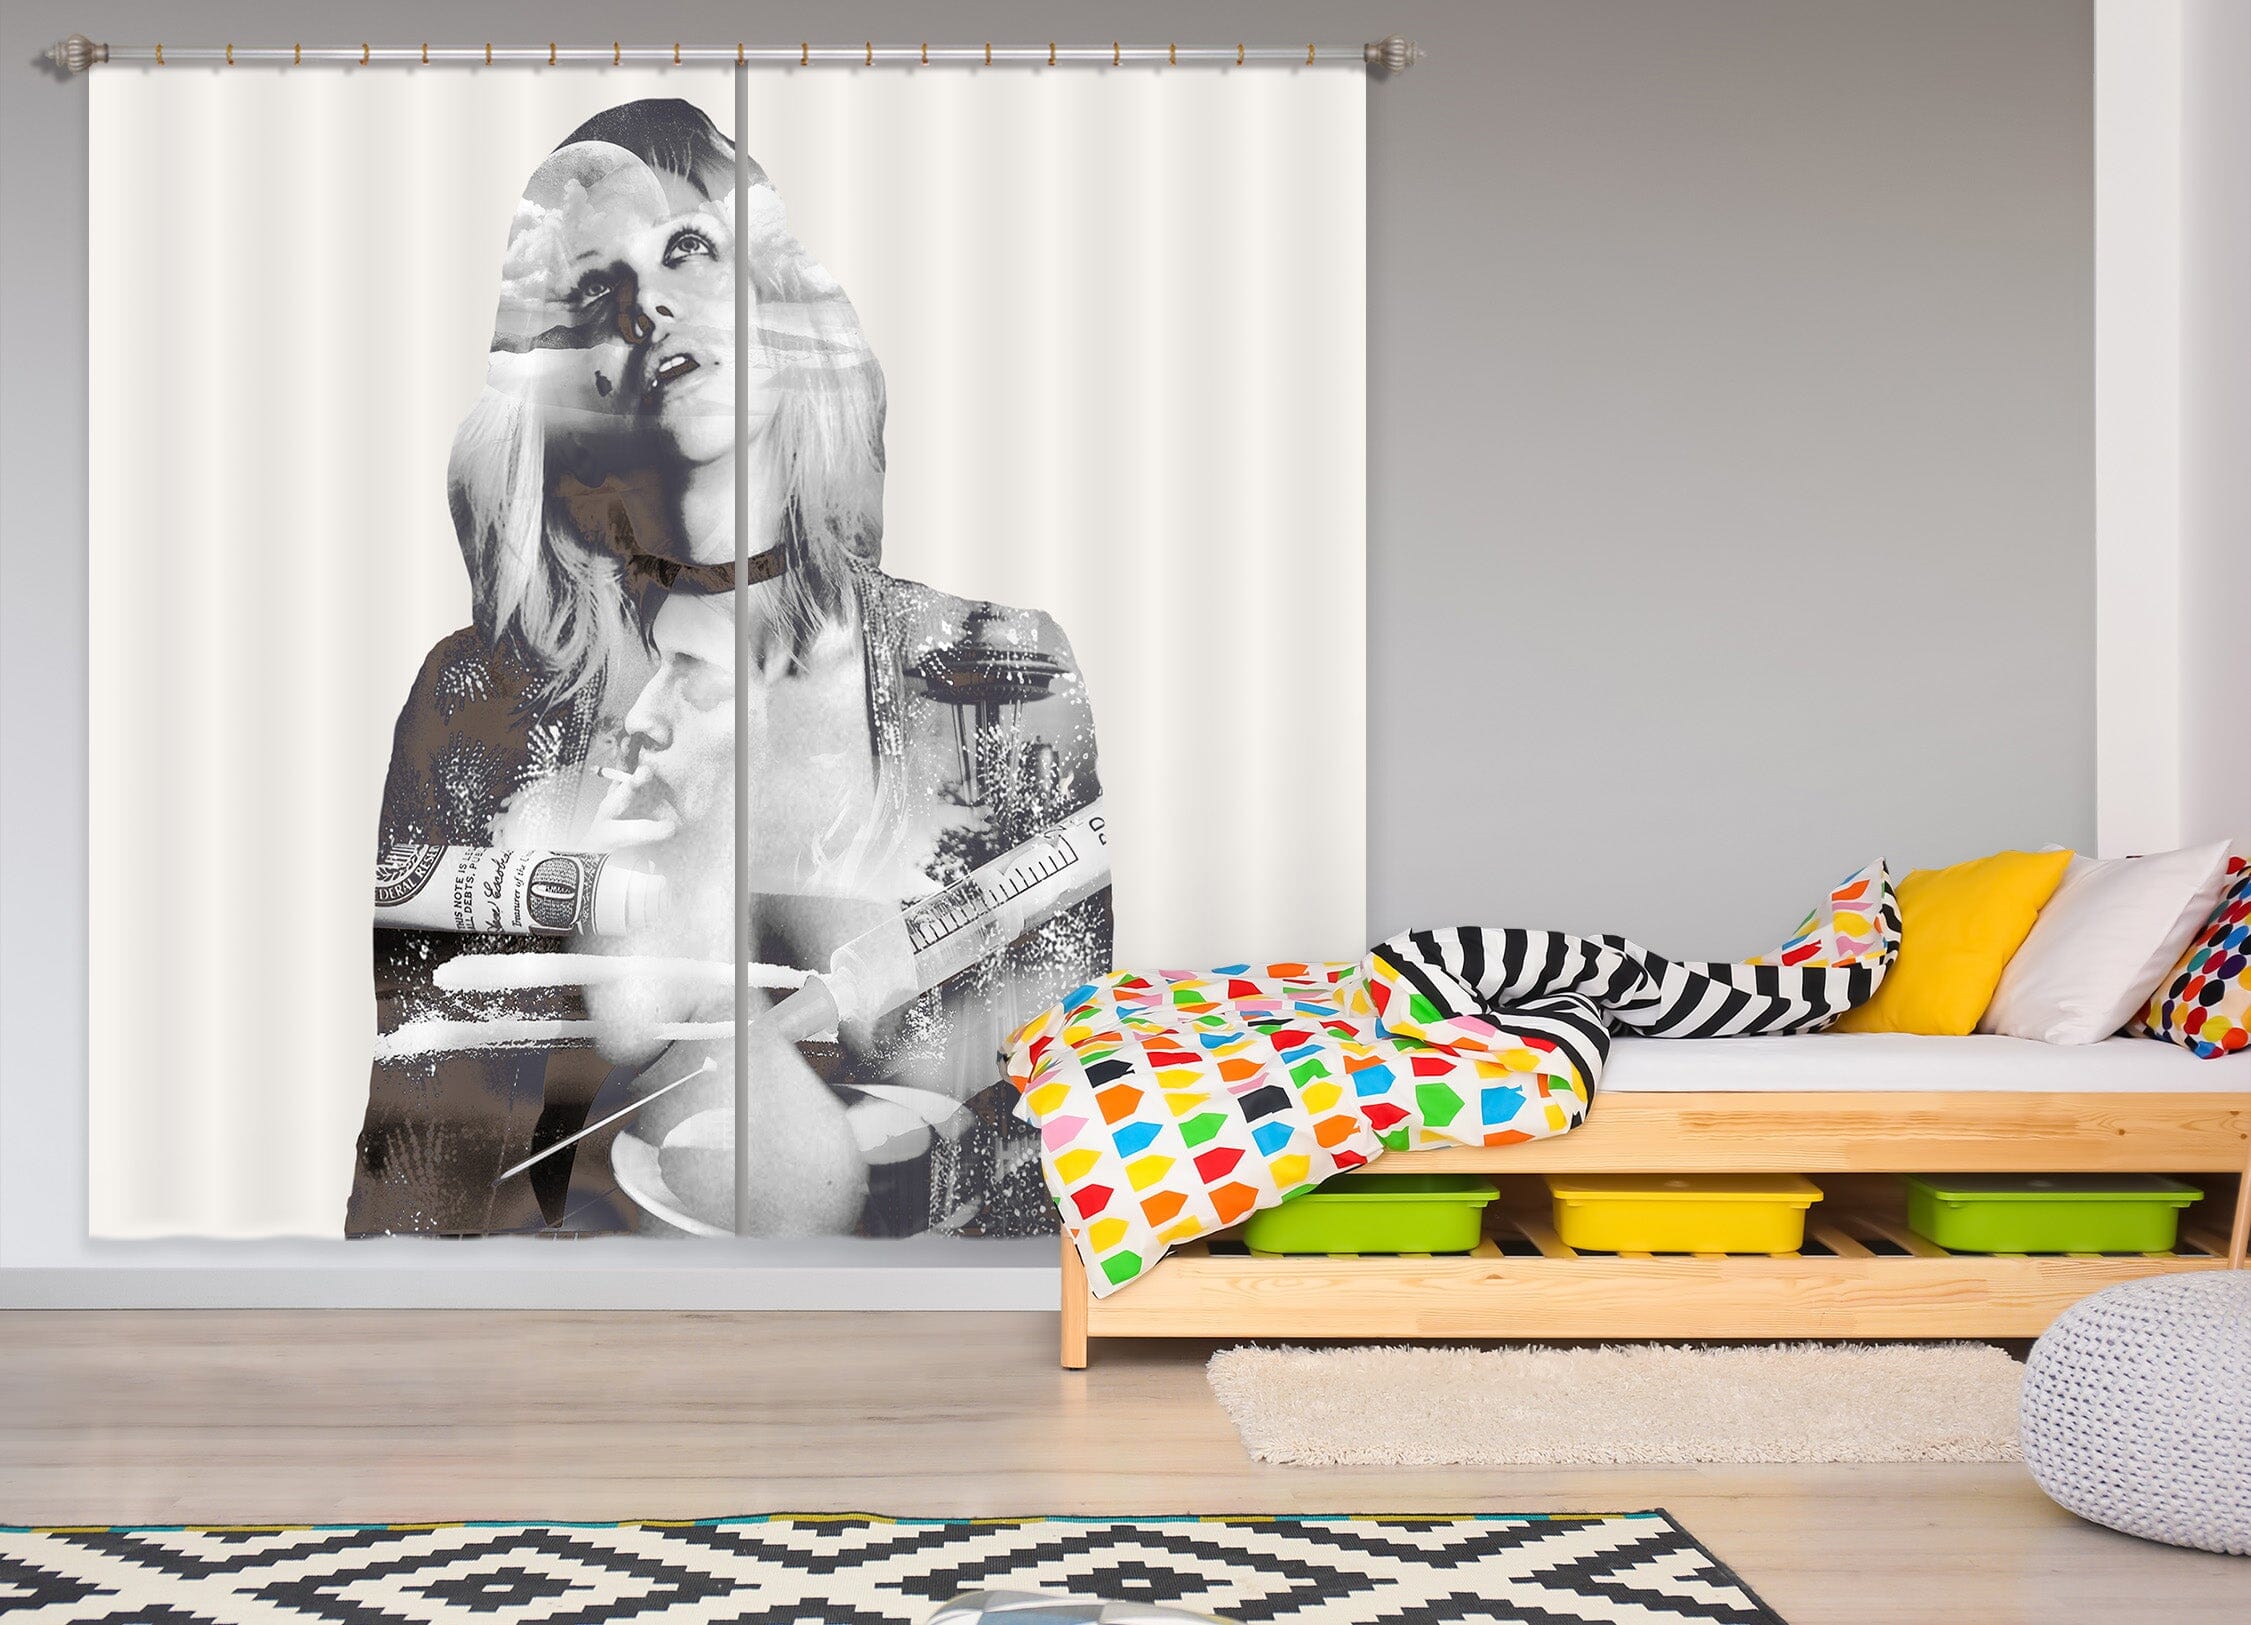 3D Courtney Love Star 033 Marco Cavazzana Curtain Curtains Drapes Curtains AJ Creativity Home 